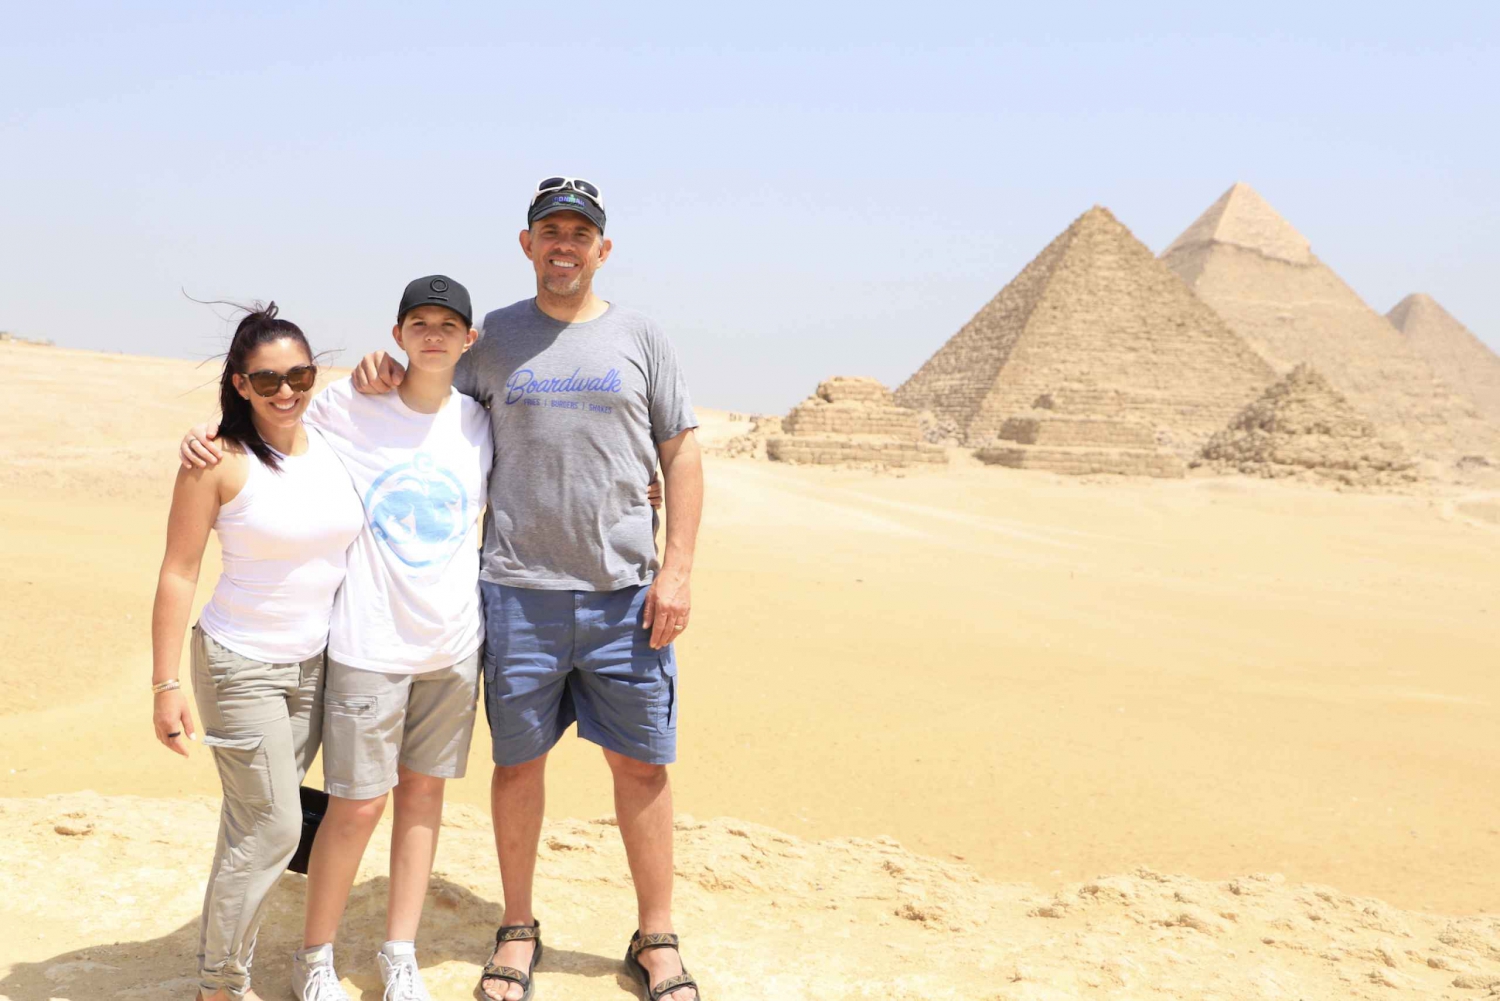 Gizeh: Halfdaagse tour met lunch en toegang tot de piramides